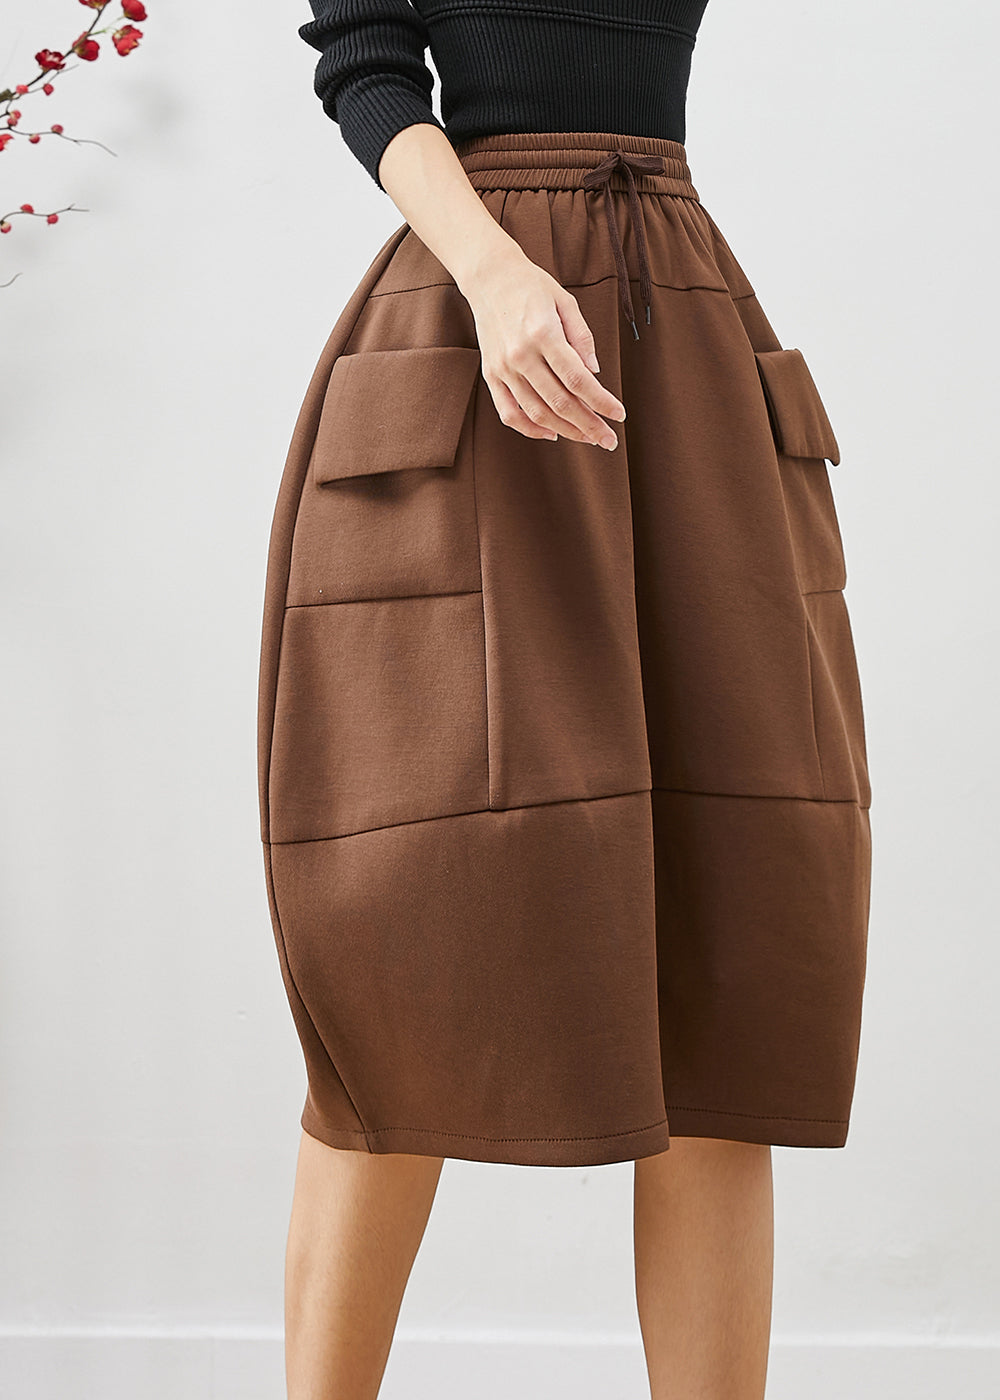 Chocolate Patchwork Cotton Skirts Elastic Waist Pockets Fall